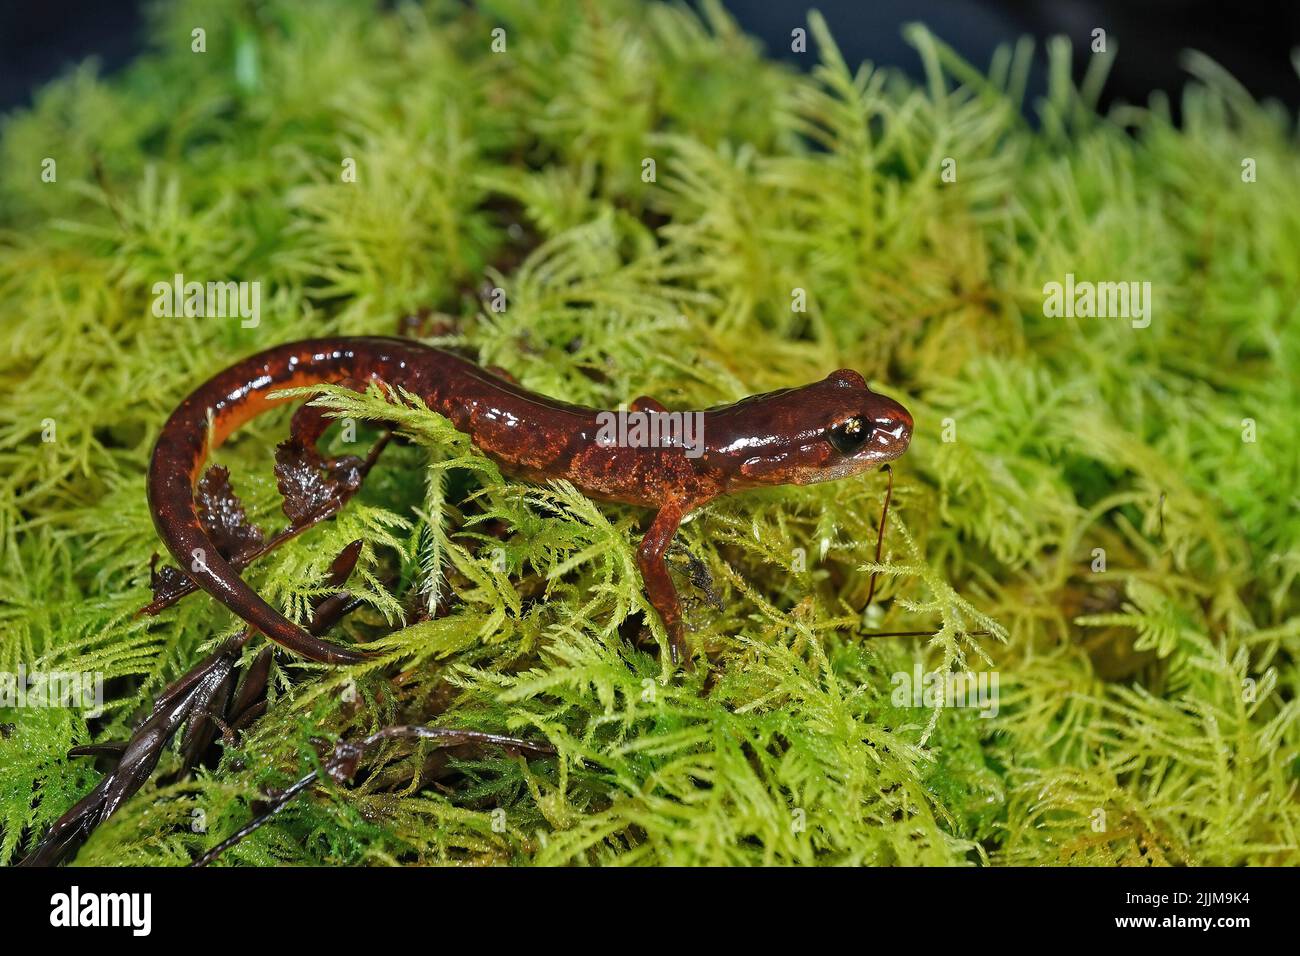 Closeup on a male orange brown  Californian Ensatina eschscholtzii picta salamander, sitting on green moss Stock Photo